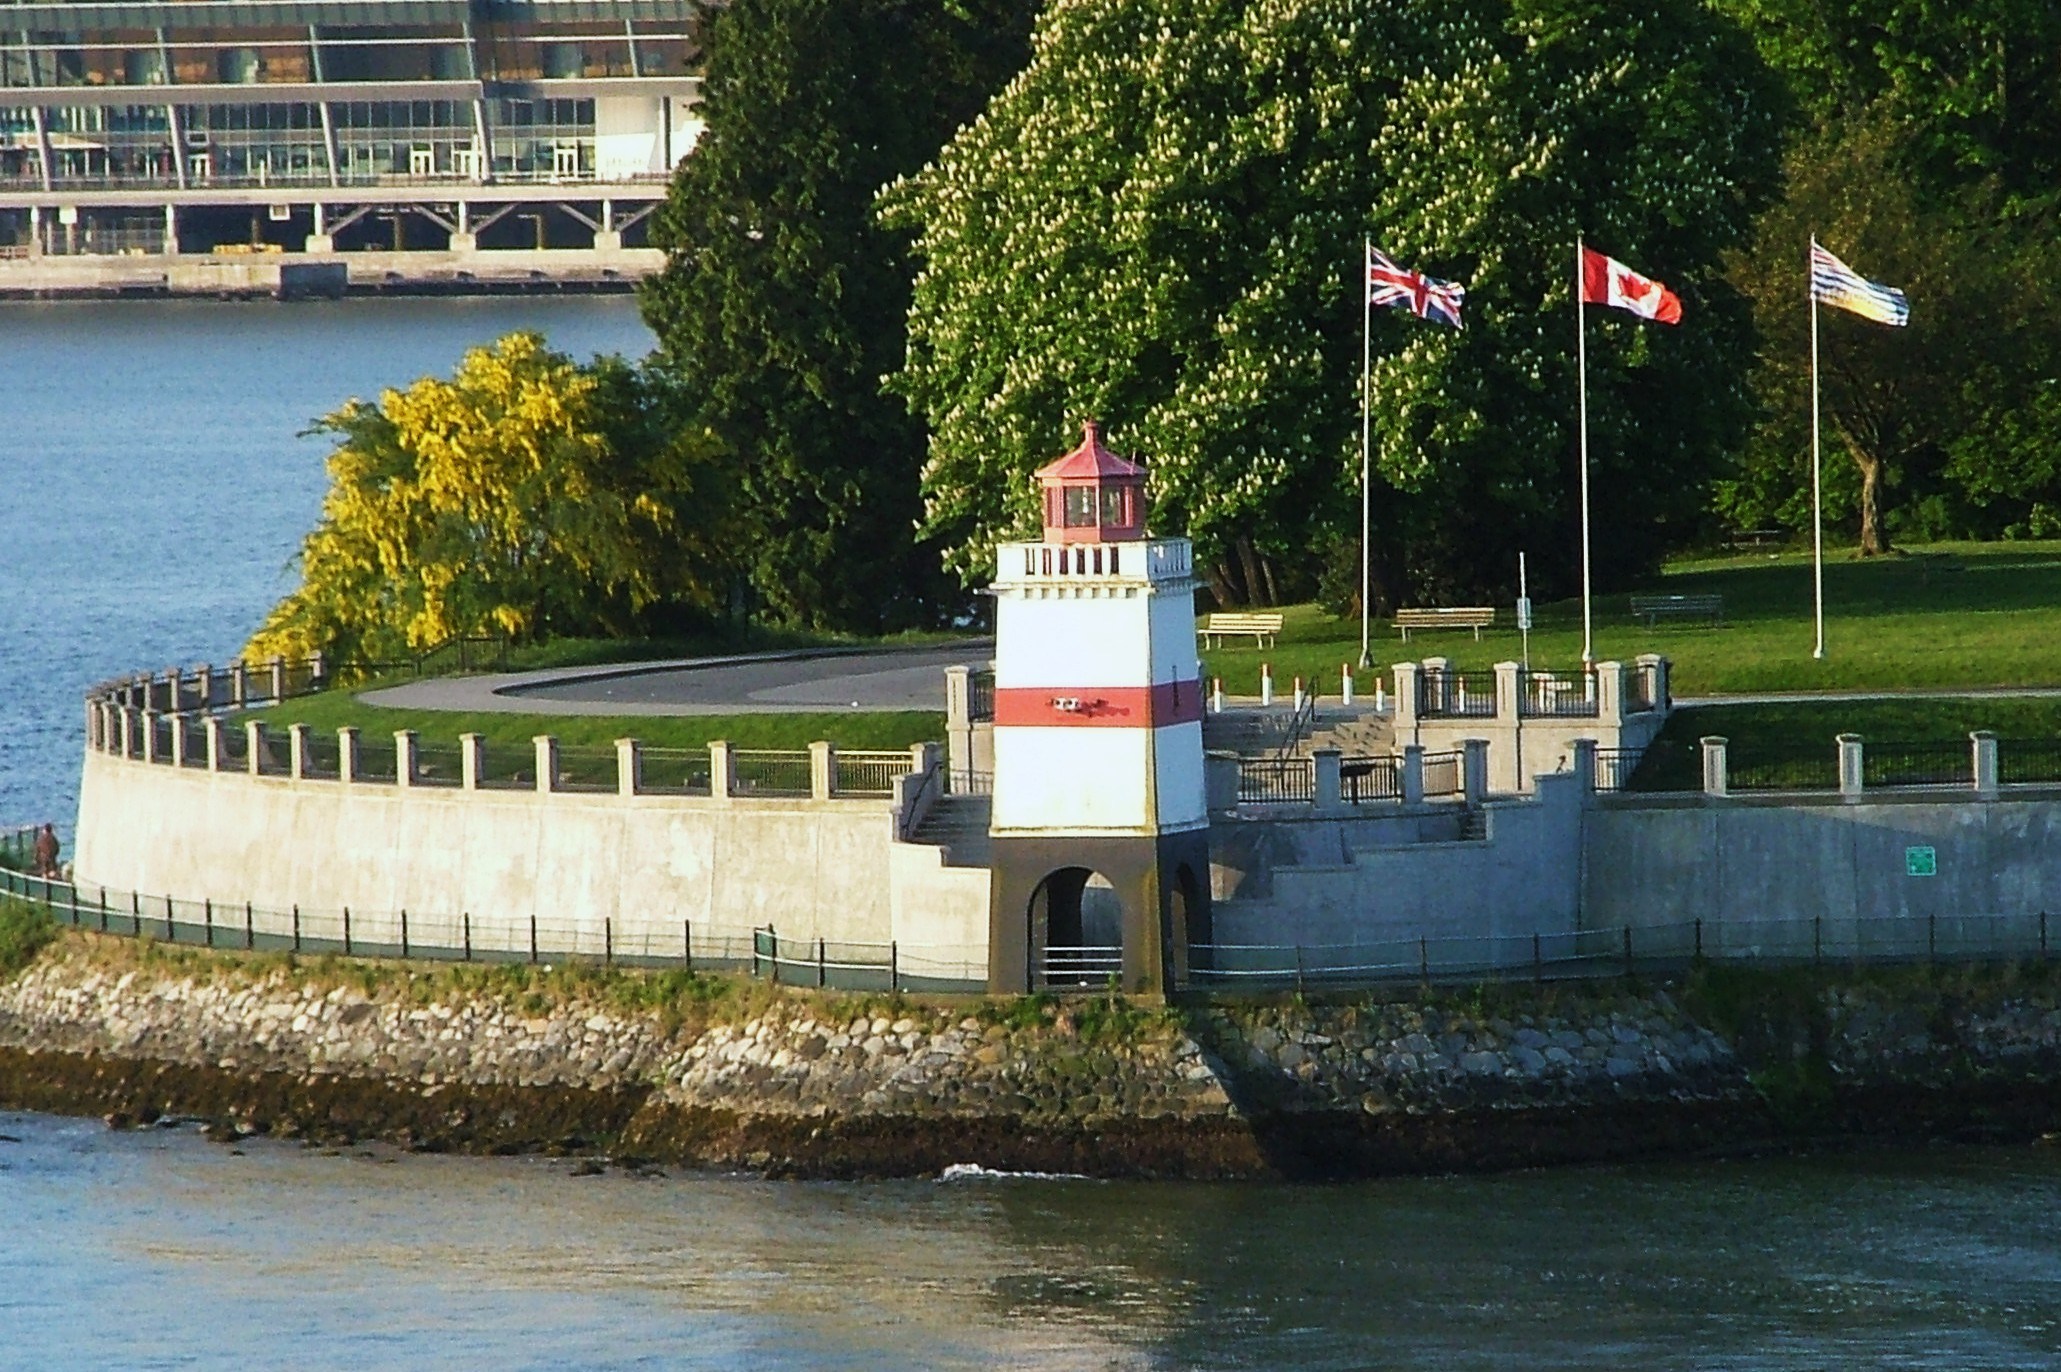 British Columbia / Vancouver / Brockton Point Lighthouse
Source: [url=http://bitstop.squarespace.com]Bit Stop[/url]
Keywords: Vancouver;Canada;British Columbia